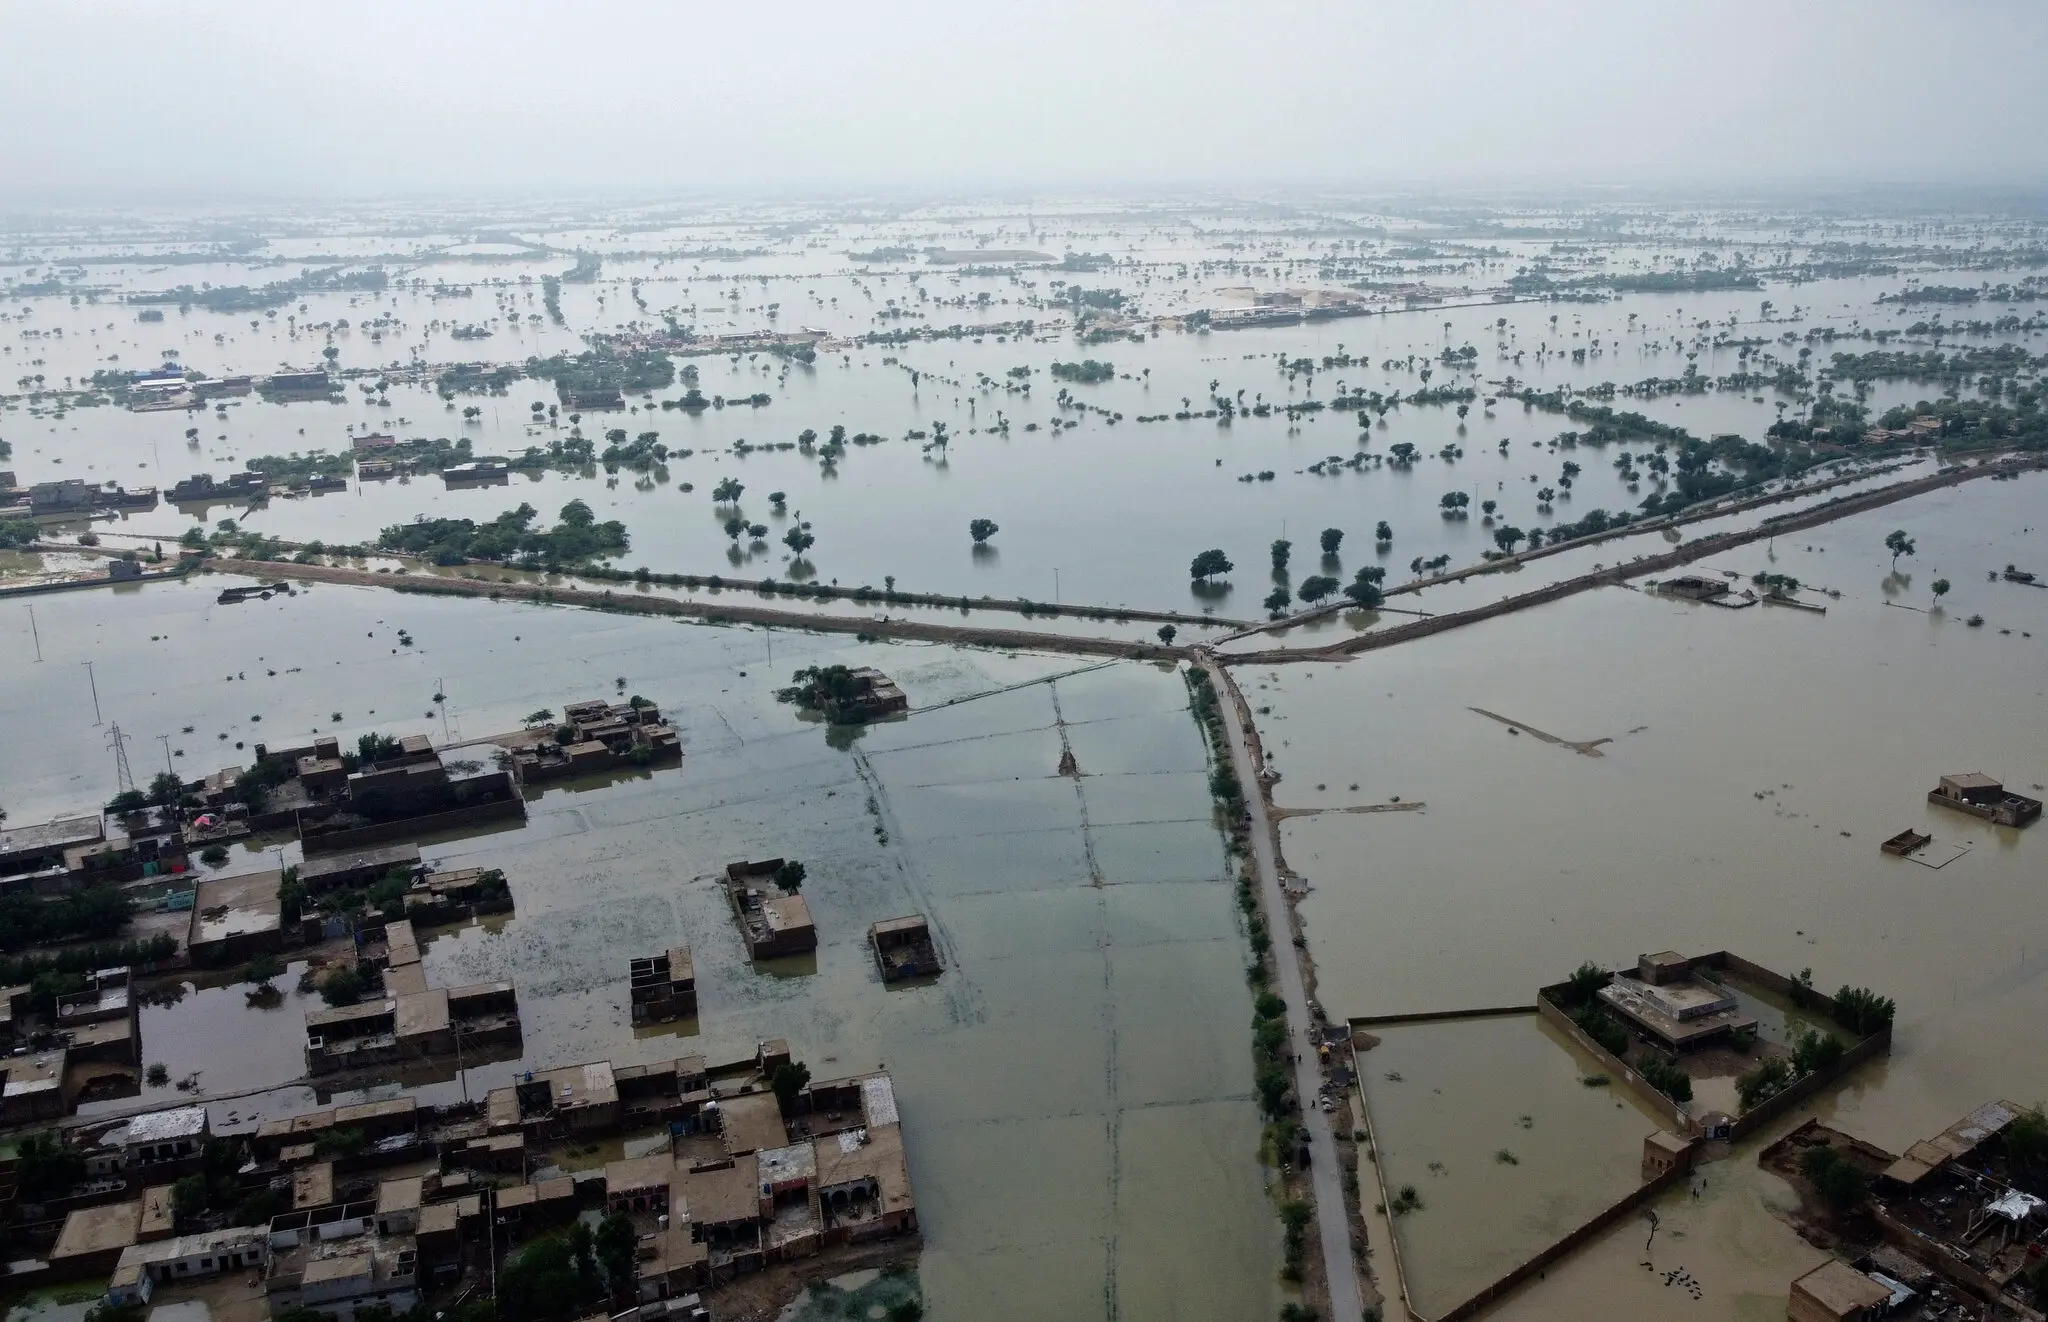 Floods and Climate Change|merlin_212134182_de42d62f-12c3-4f73-a9ab-4186b9782381-superJumbo|Floods and Climate Change|220829042342-07-pakistan-floods-satellite-devastation|_126568307_gettyimages-1241745727.jpg|Flood and Climate Change